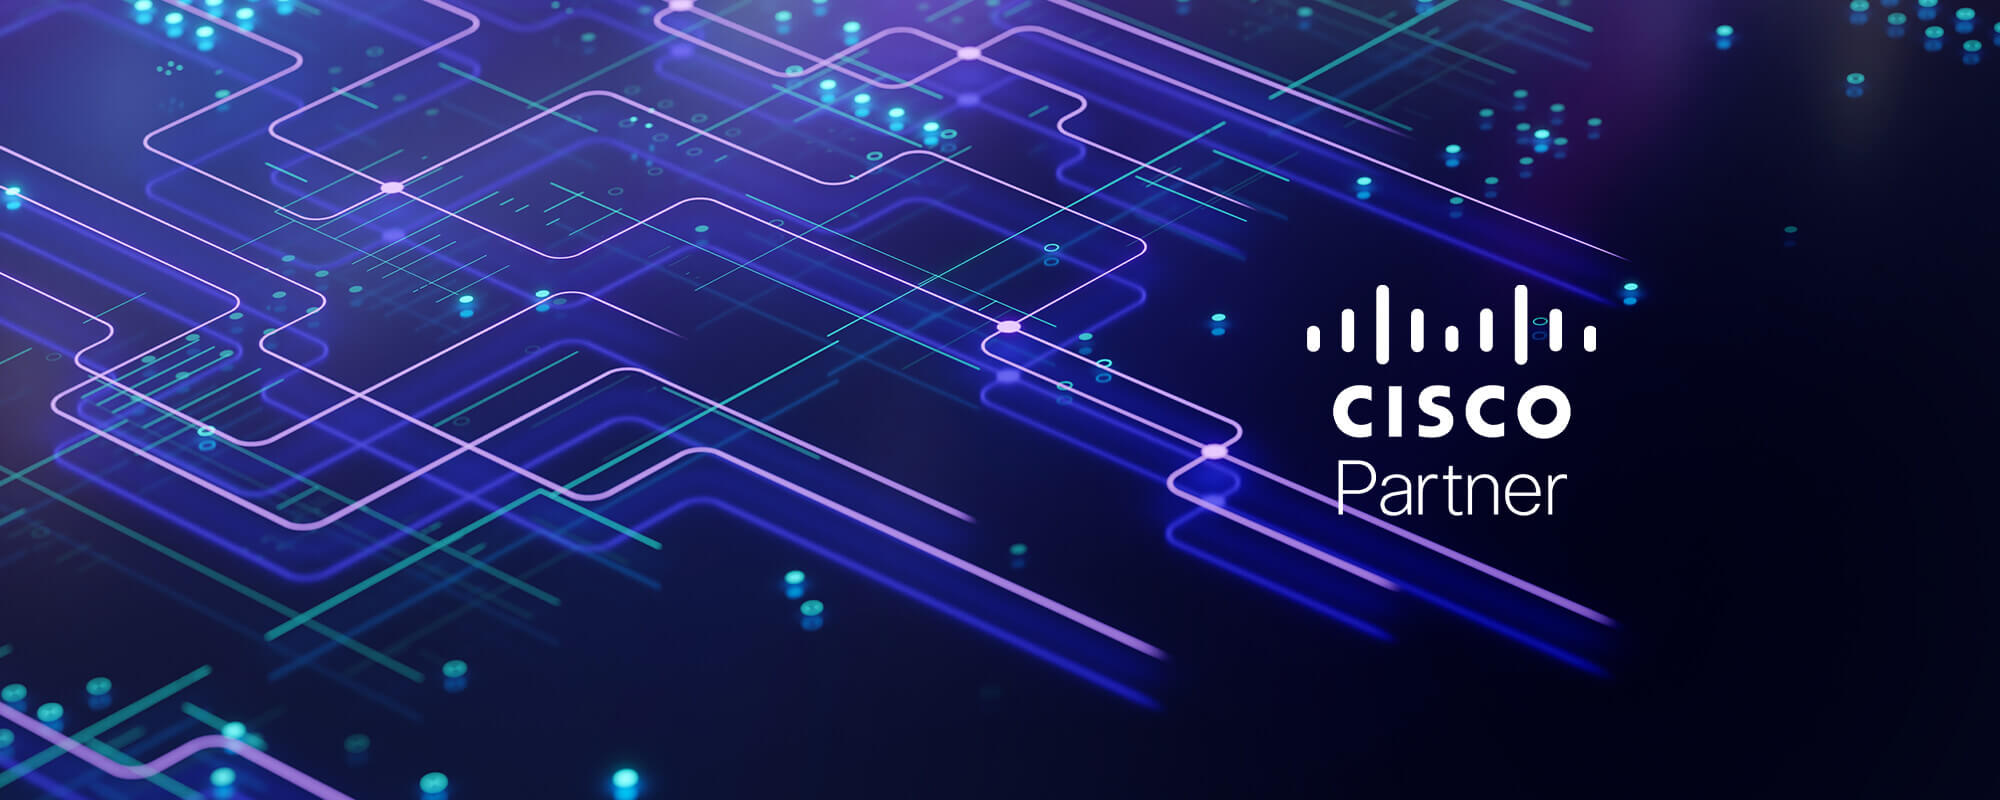 CyberNova is now a Cisco Partner